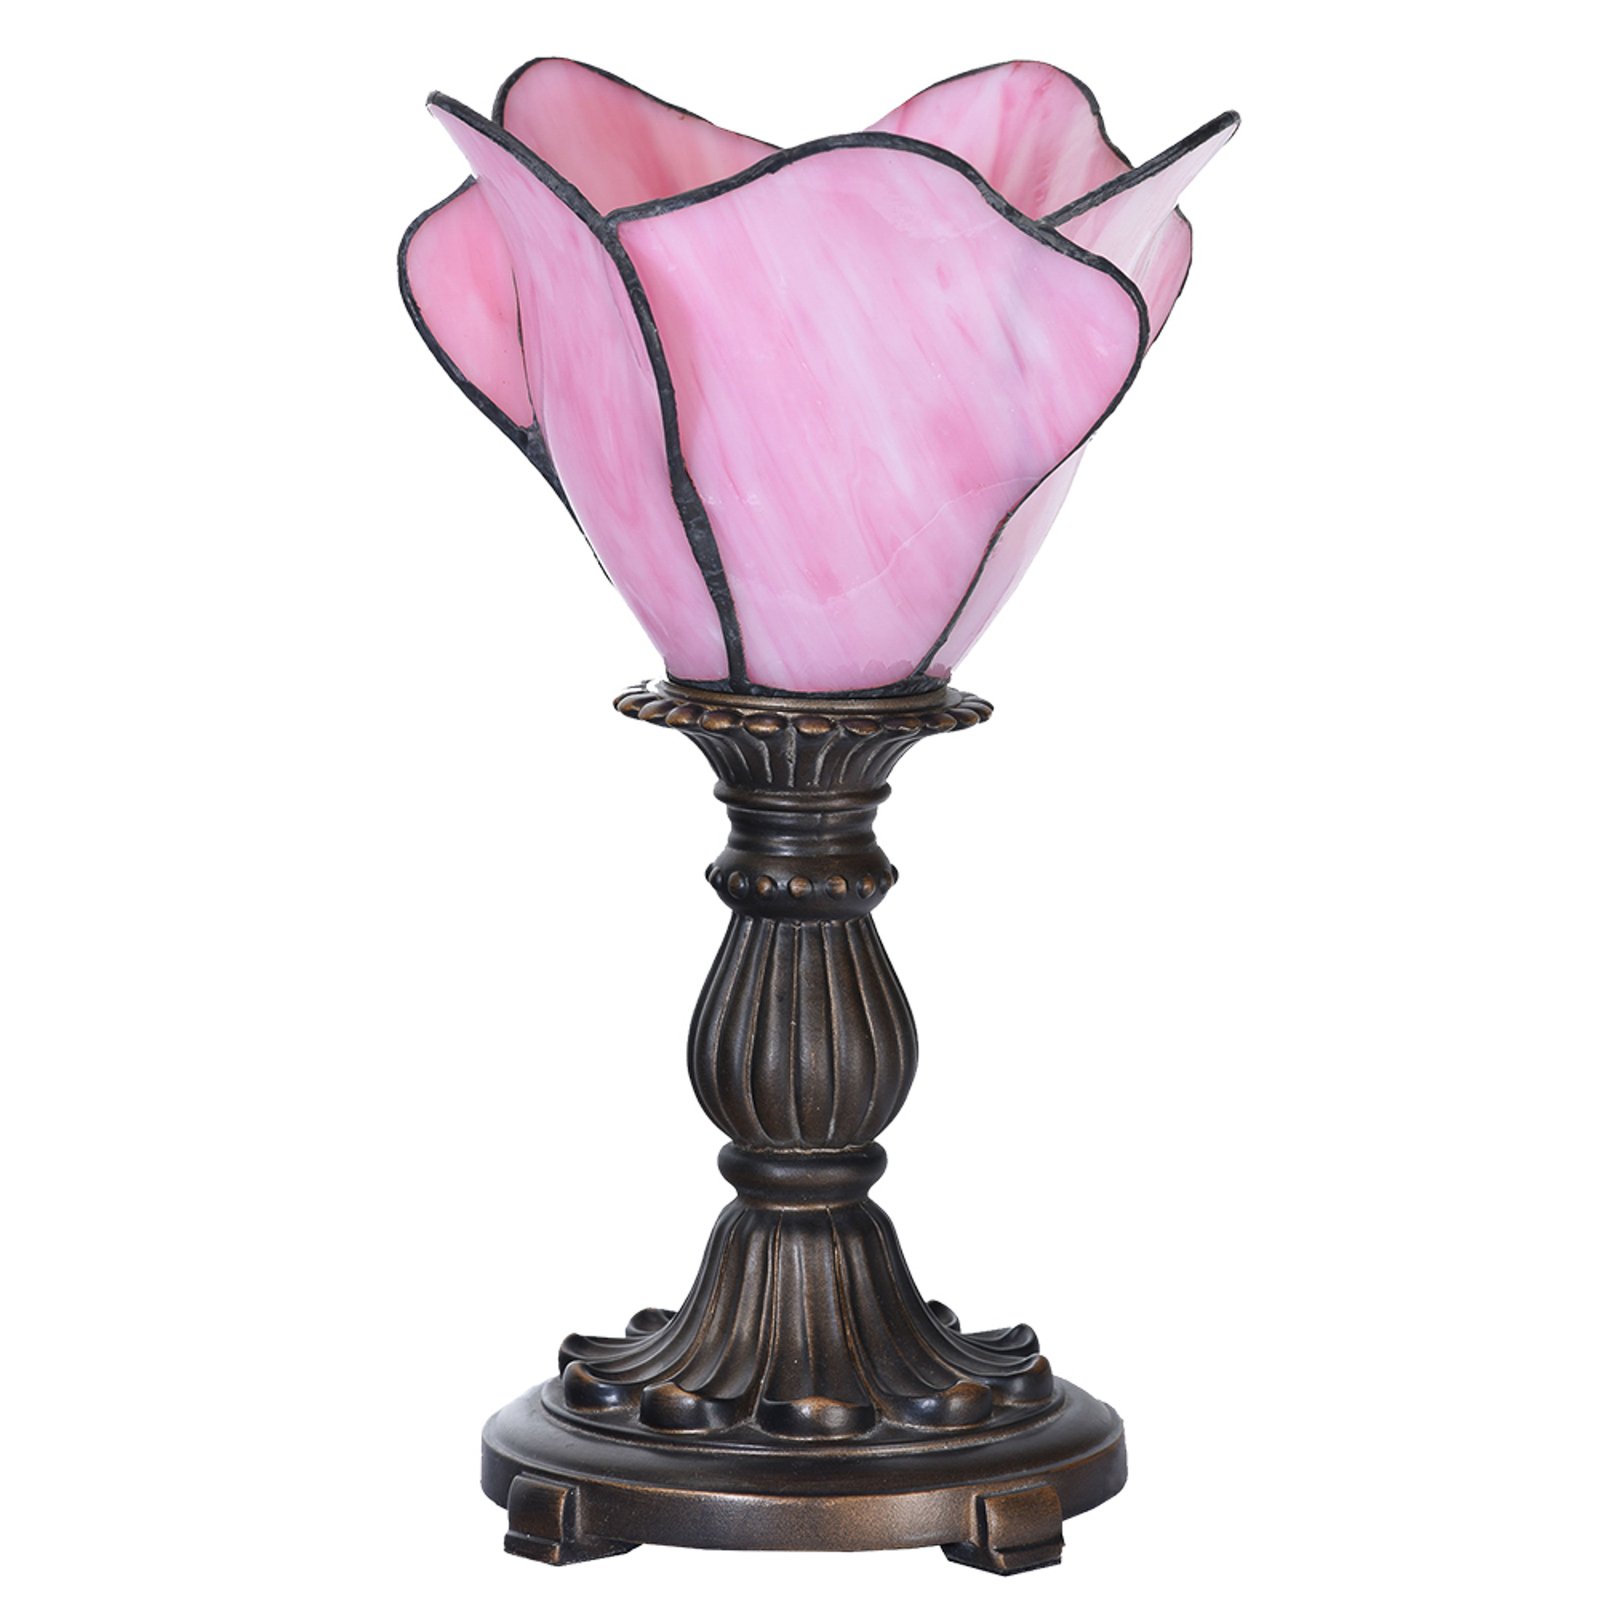 Tafellamp 5LL-6099 in roze, Tiffany stijl